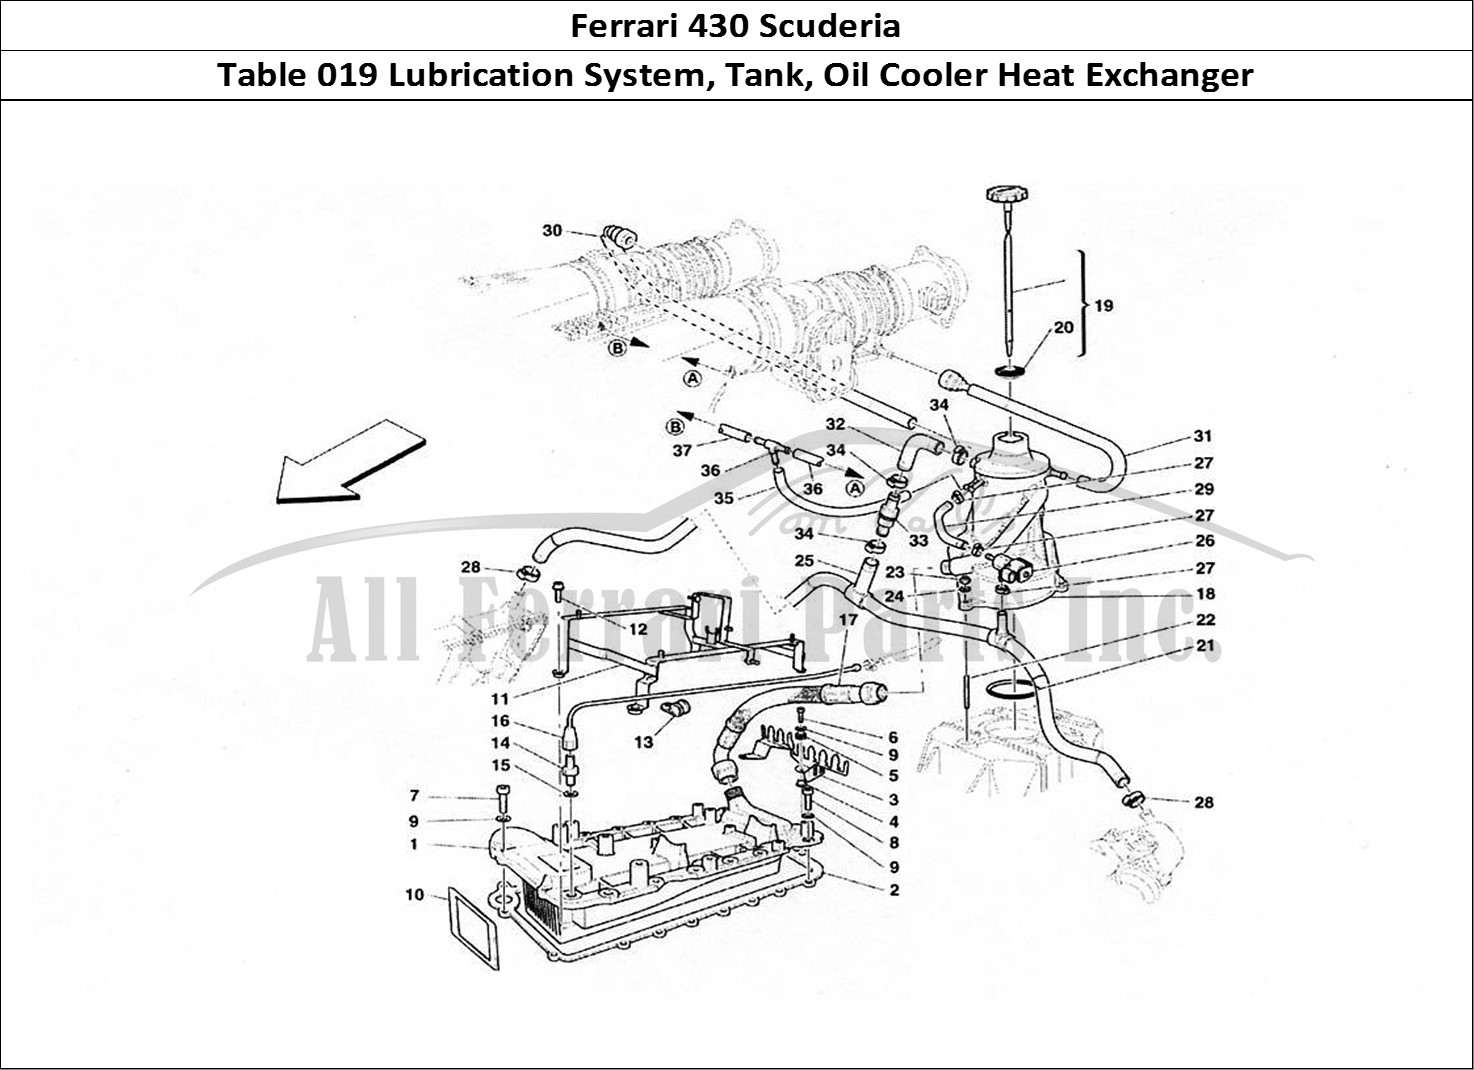 Ferrari Parts Ferrari 430 Scuderia Page 019 Lubrication System - Tank